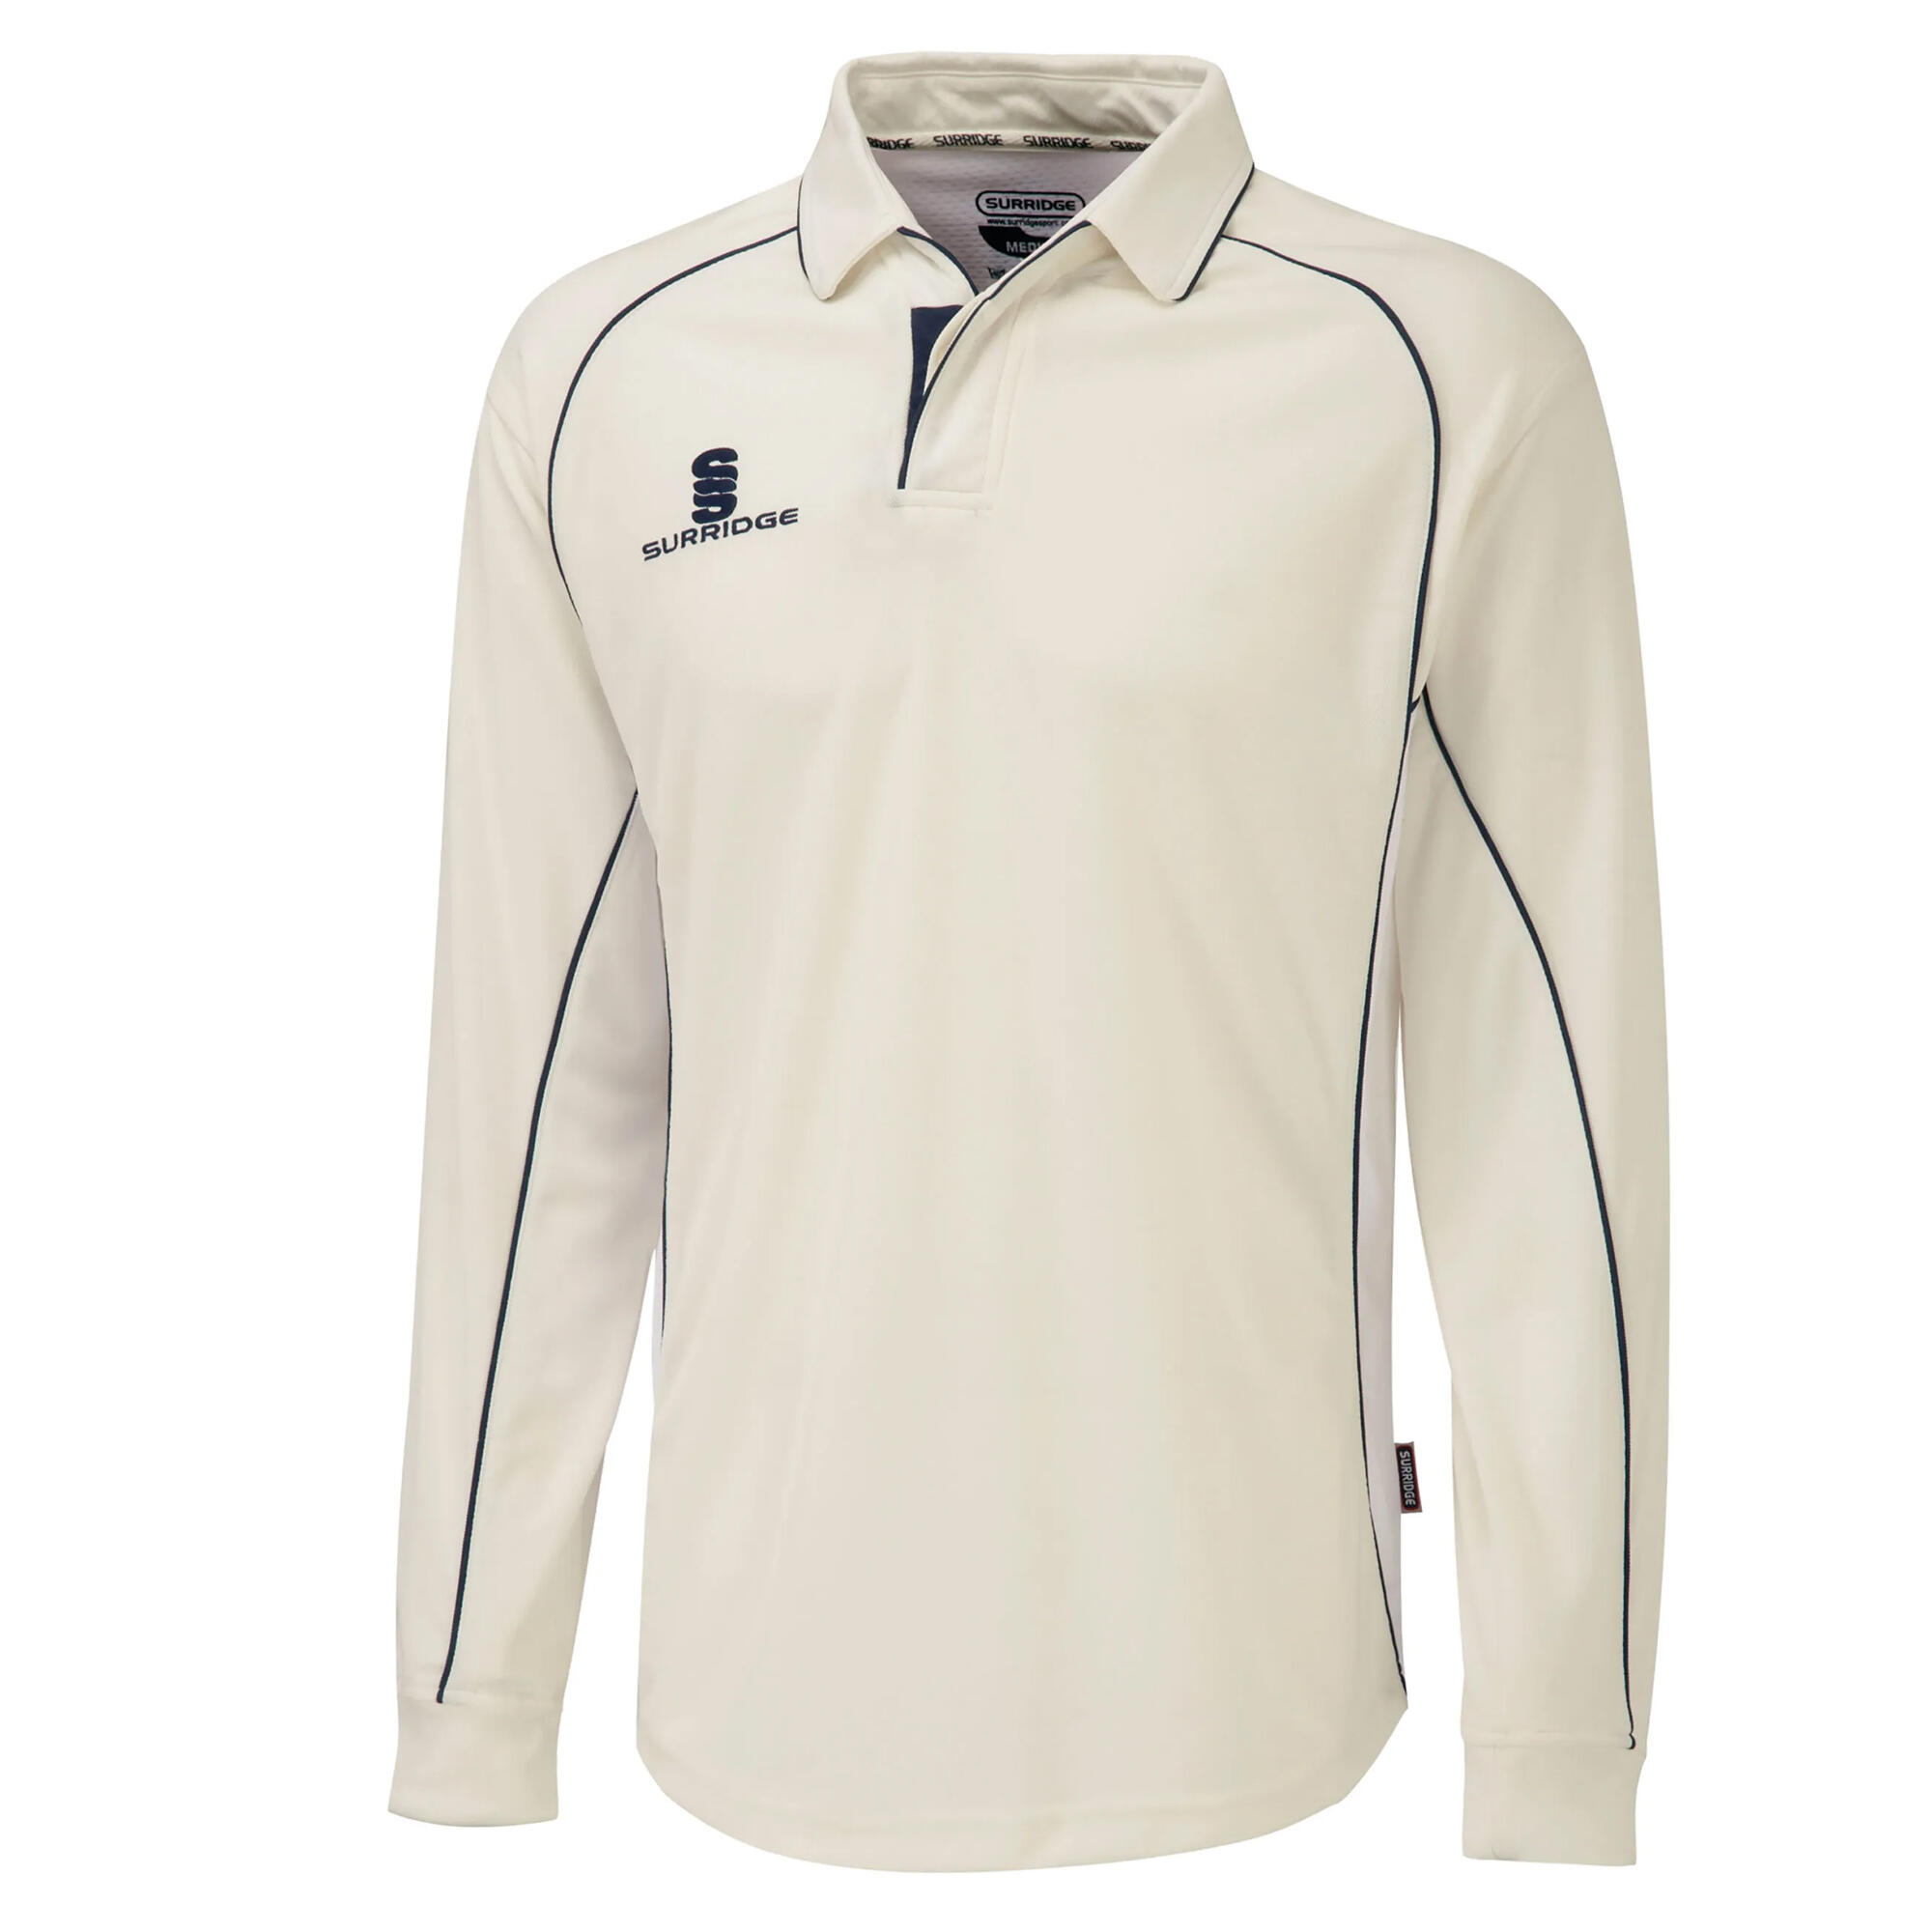 SURRIDGE Mens/Youth Premier Sports Long Sleeve Polo Shirt (Cream/Navy)